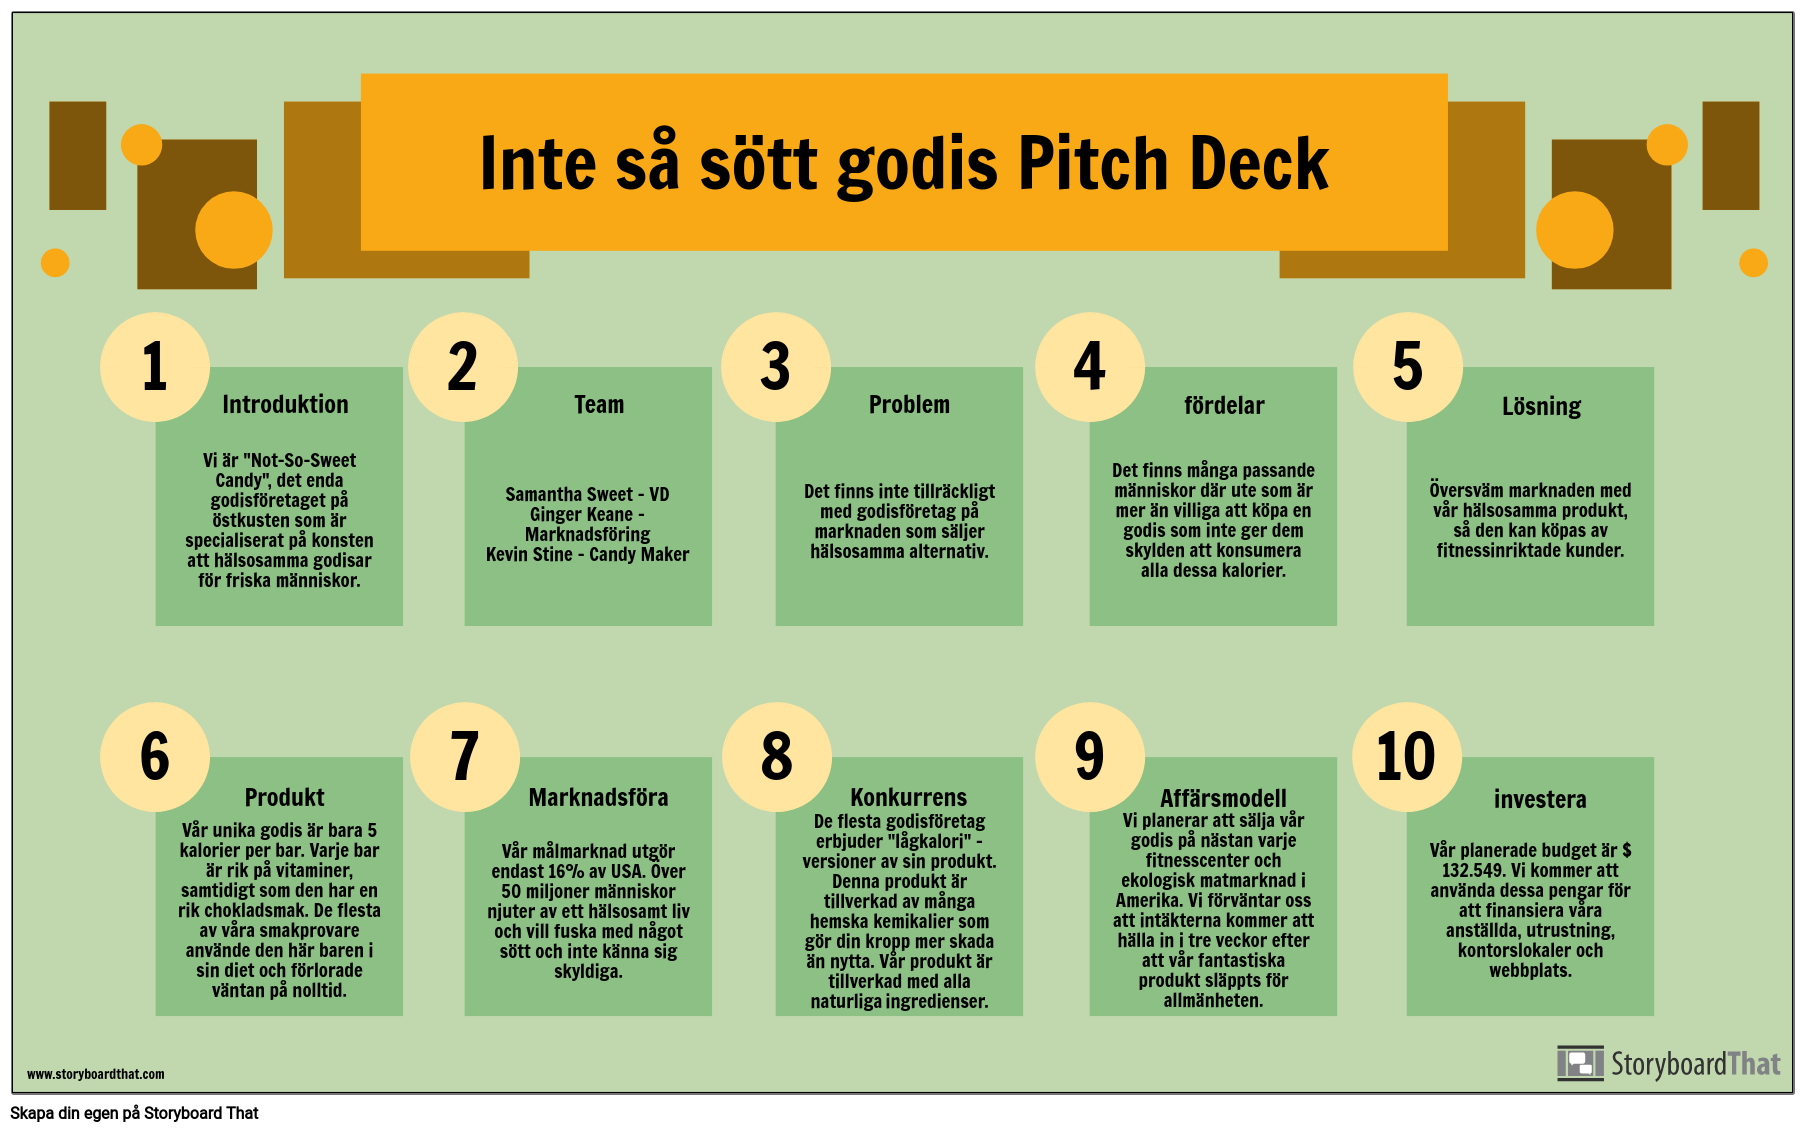 Pitch Deck Info Exempel